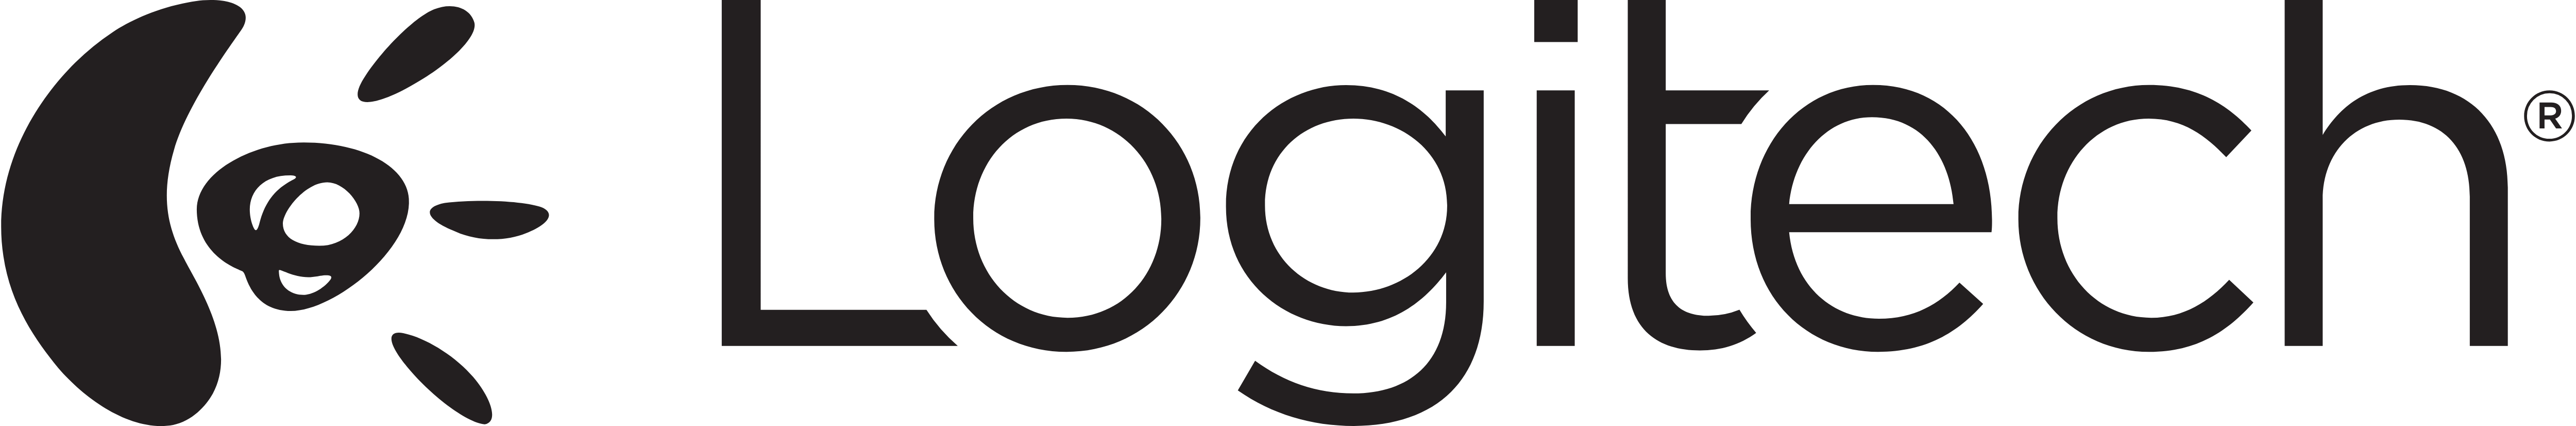 Logitech Logo PNG - 176203